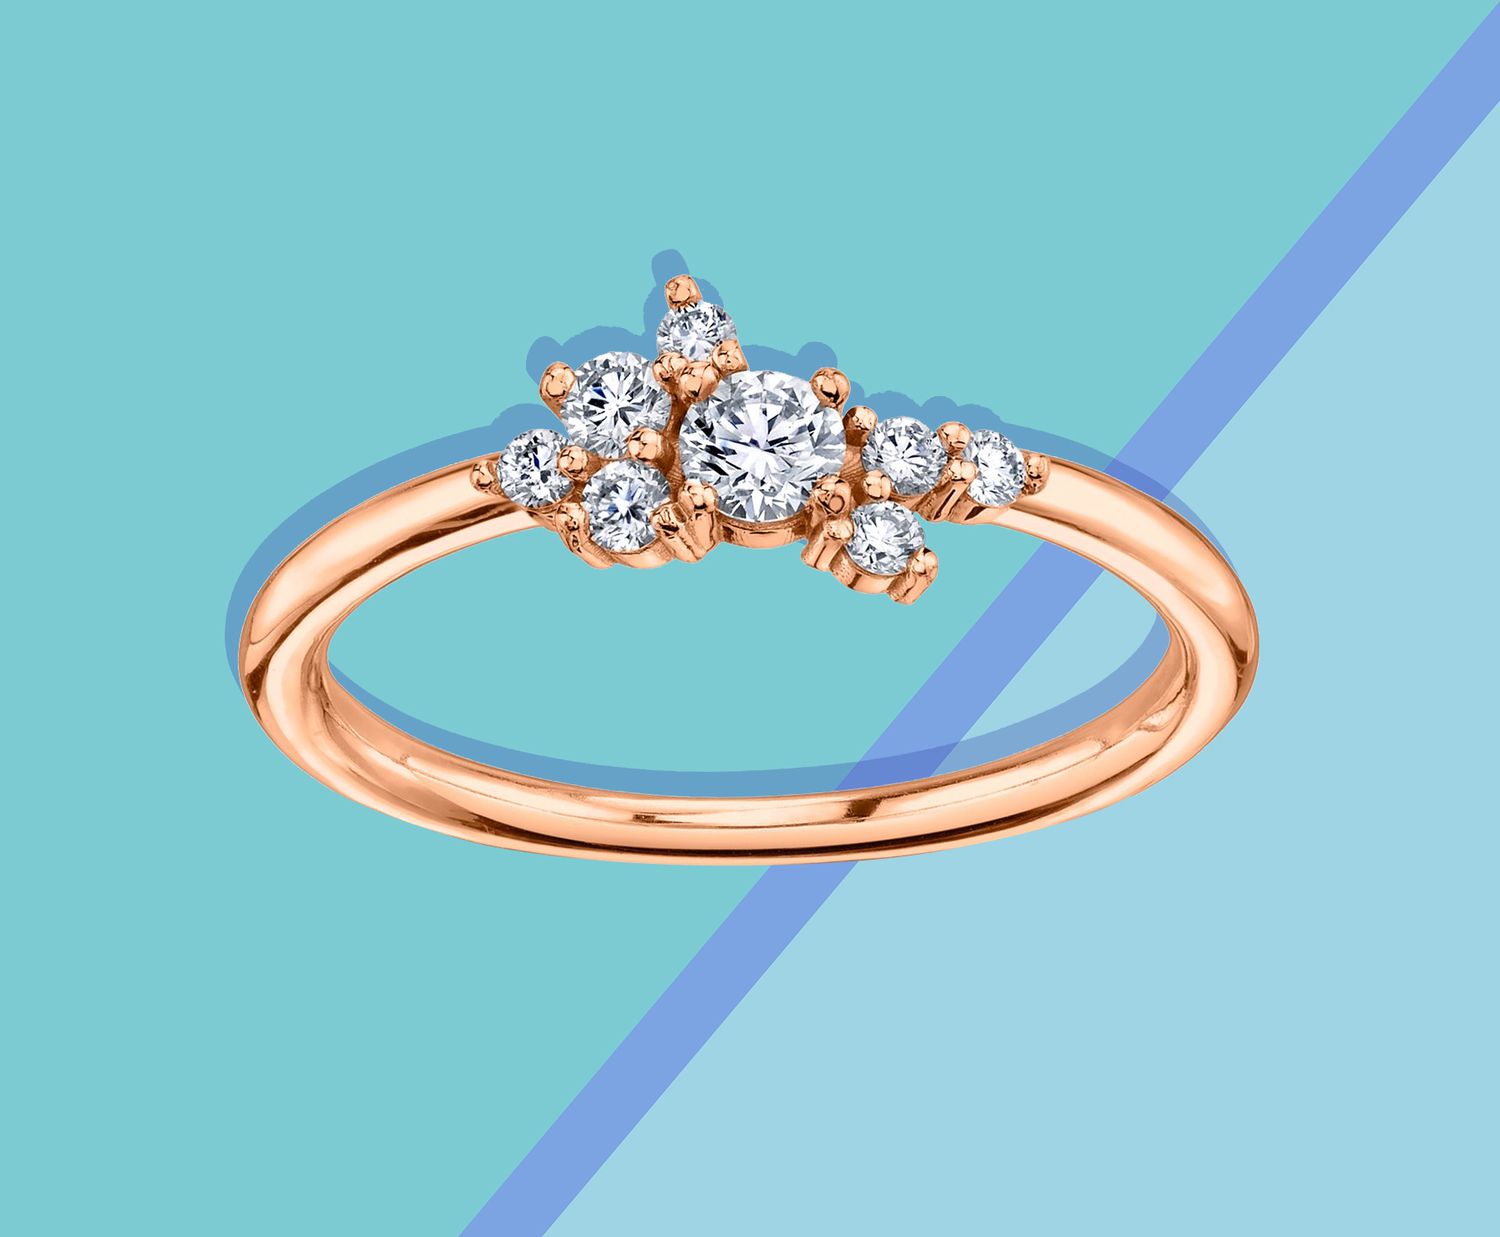 Diamond Rings For Girls/ Beautiful And Elegant Diamond Rings/. Luxury Rings For Women